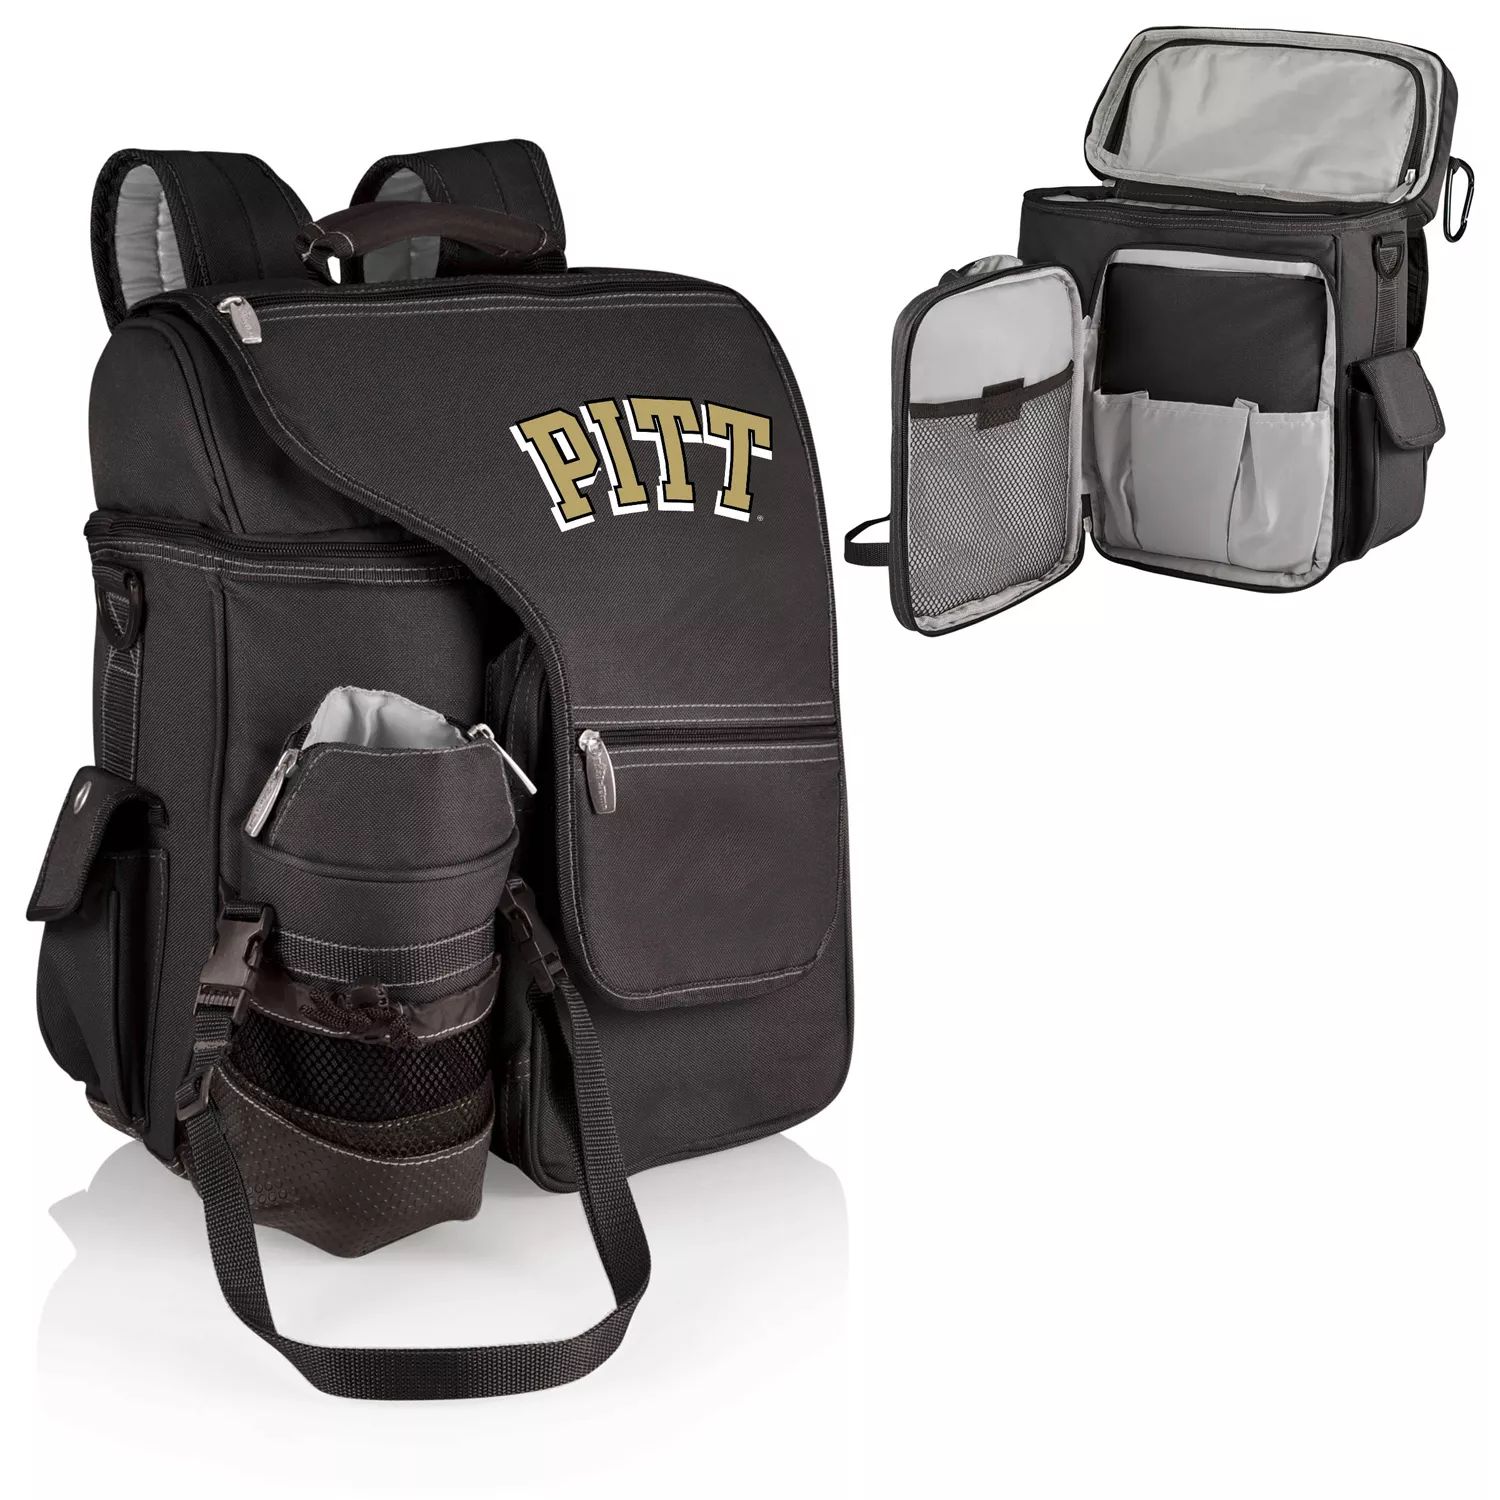 Утепленный рюкзак Pitt Panthers